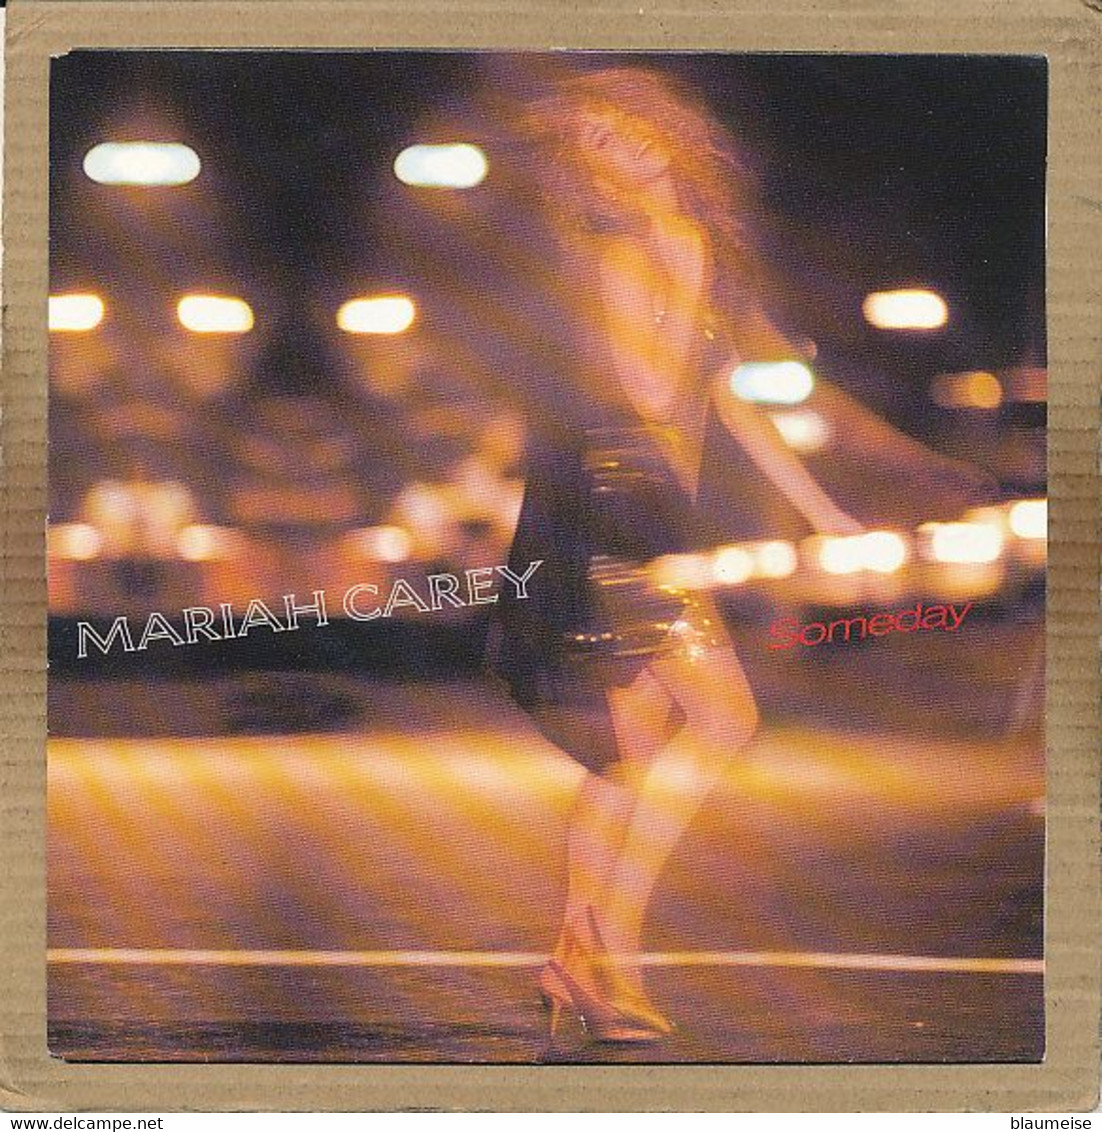 7" Single, Mariah Carey - Someday - Disco, Pop